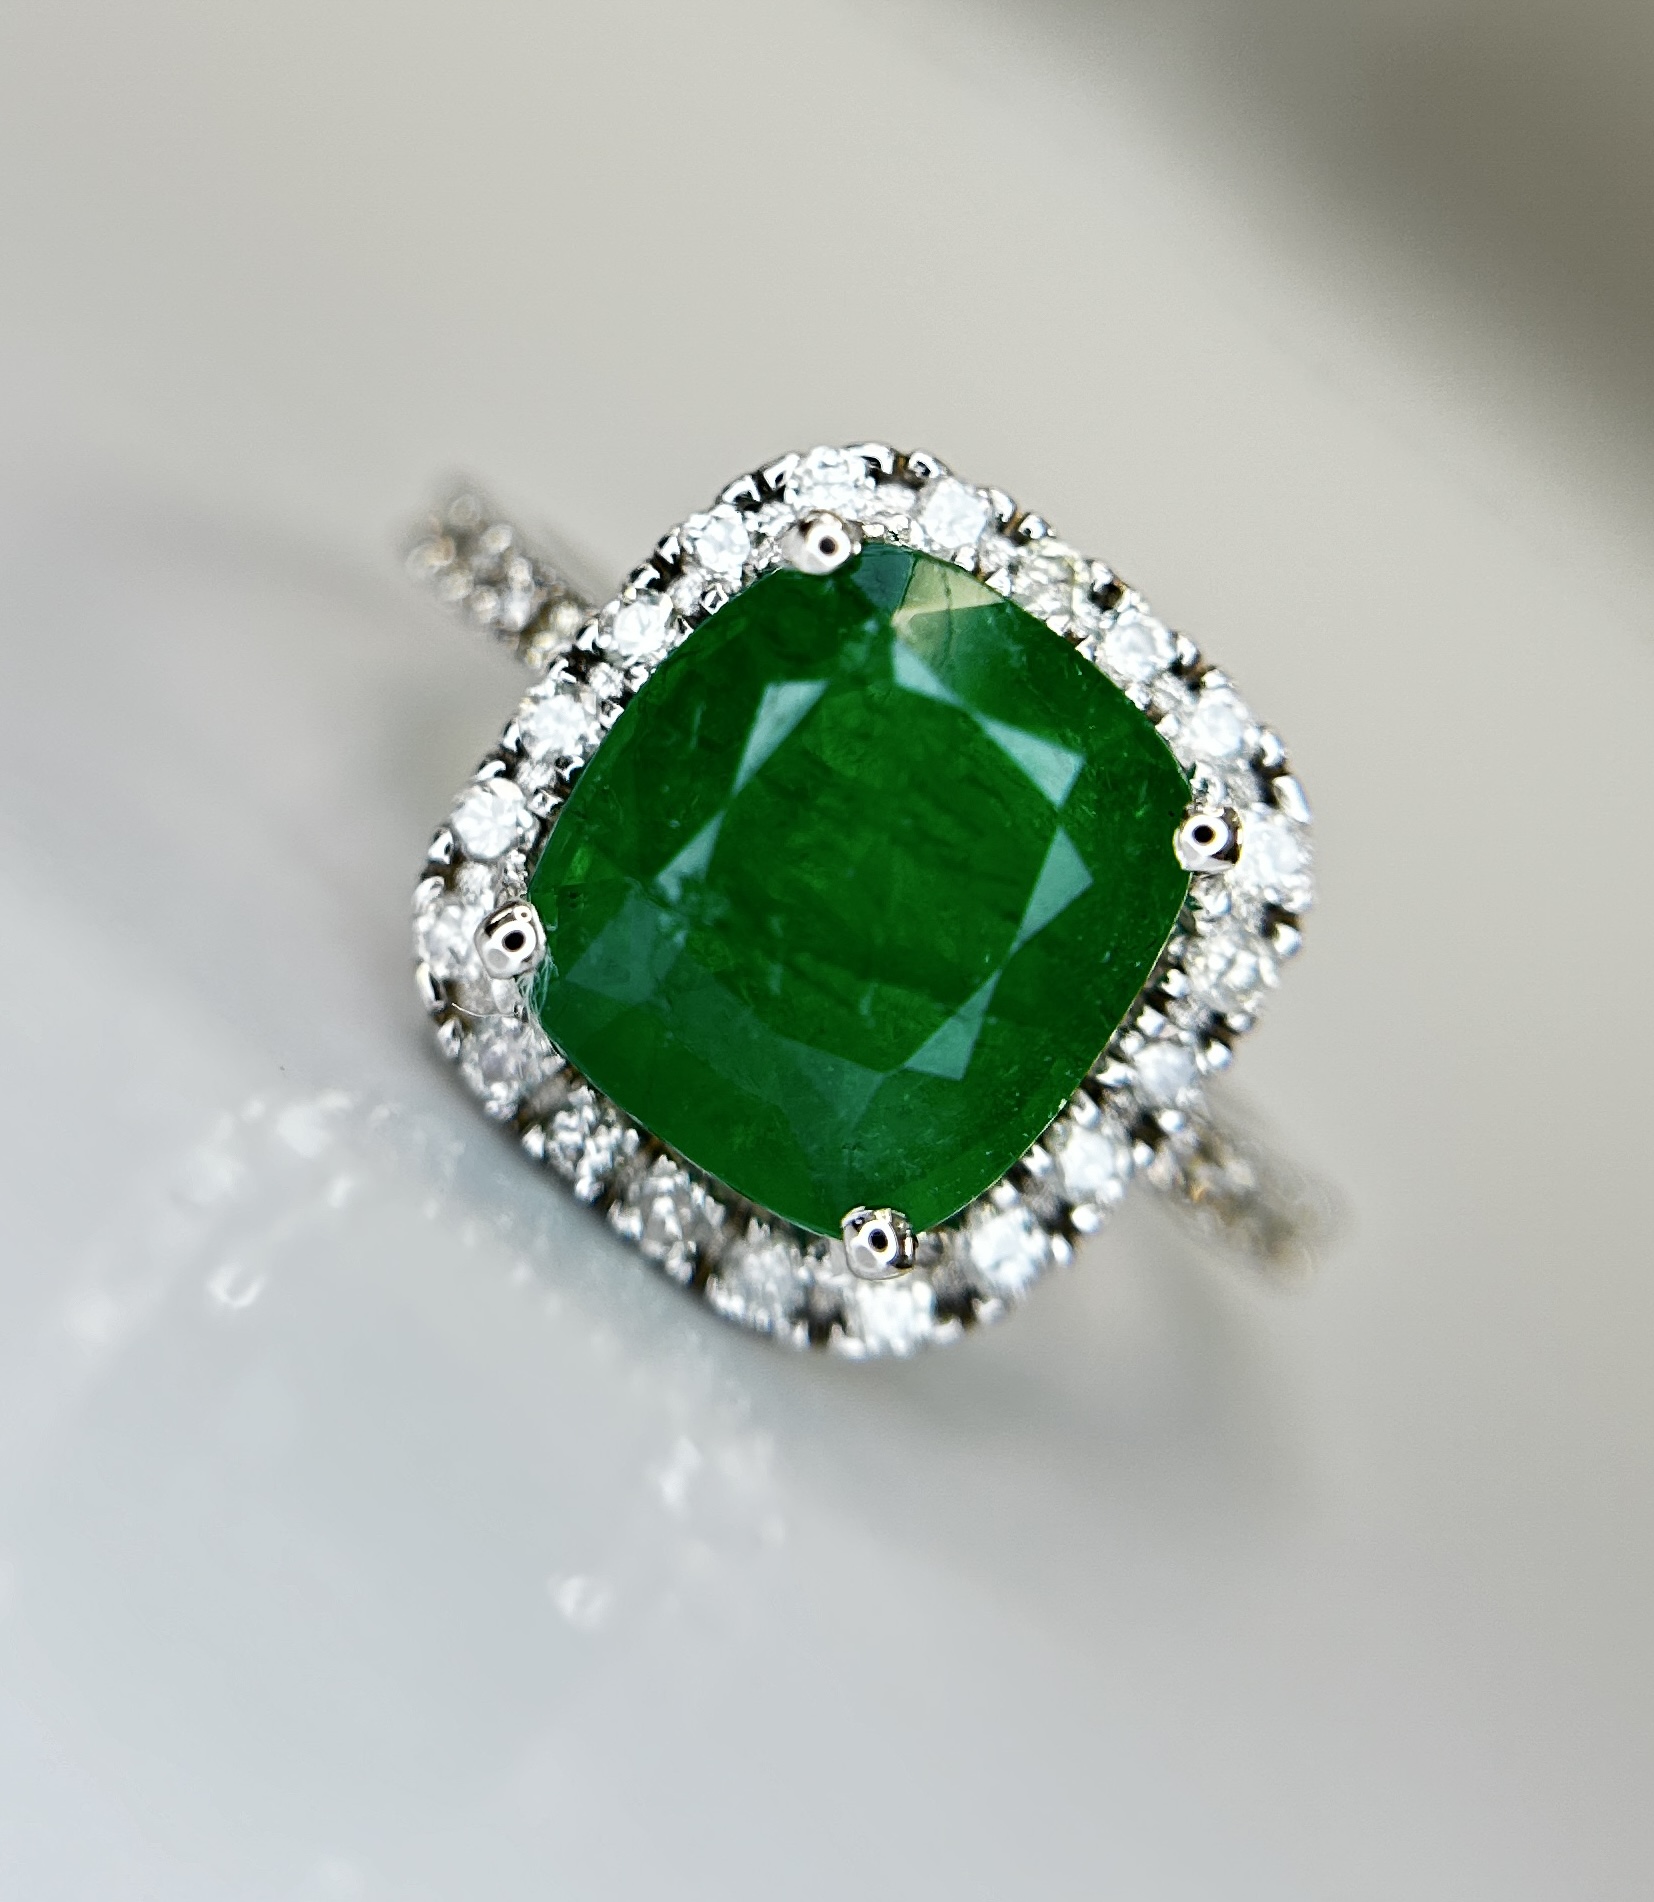 Beautiful Natural 2.81ct Emerald With Natural Diamonds & 18k Gold